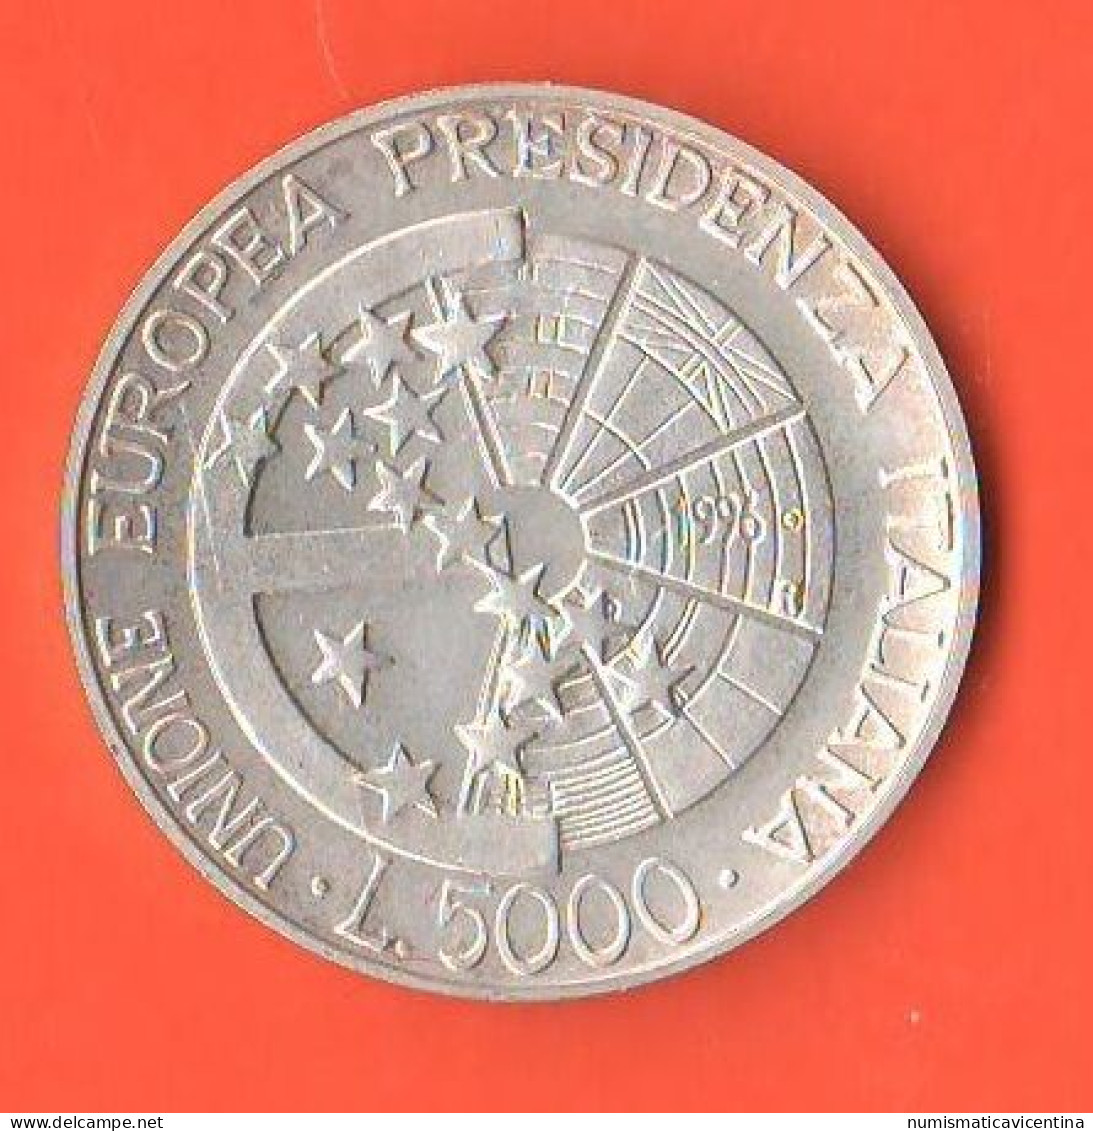 Italia 5000 Lire 1996 Presidenza Cee Italian Presidency European Union Italy Italie Silver Coin - Herdenking